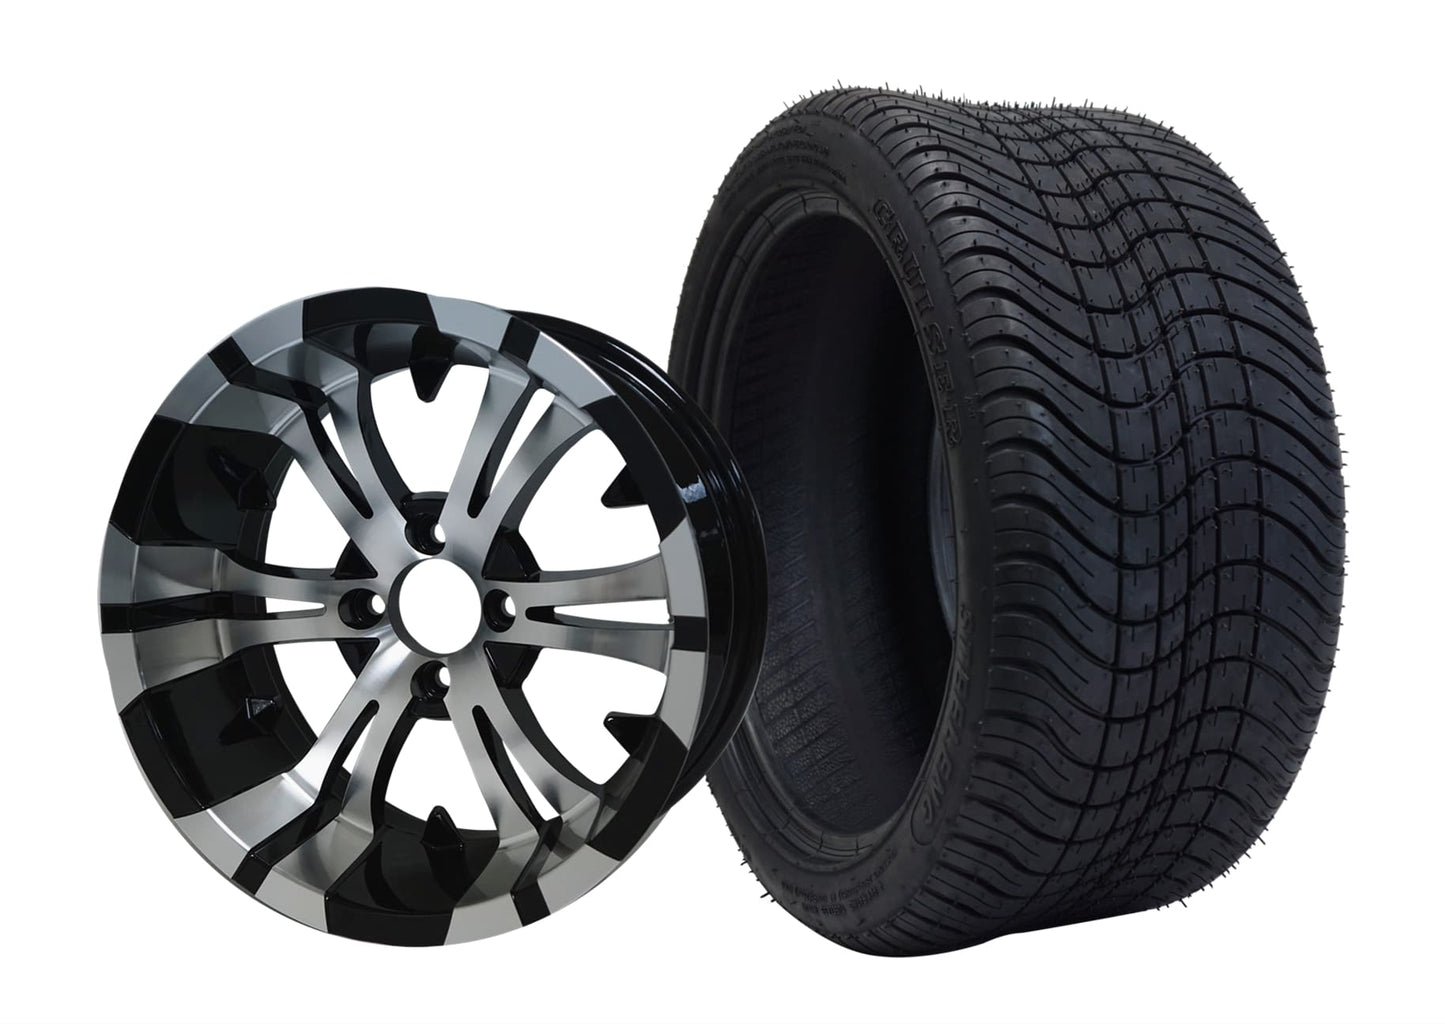 BNDL-TR1401-WH1413-LN0001-CC0001 – SGC 14″ Vampire Machined/Black Wheel – Aluminum Alloy / STEELENG 22″x10.5″-14″ GATOR All Terrain Tire DOT Approved - Set of 4